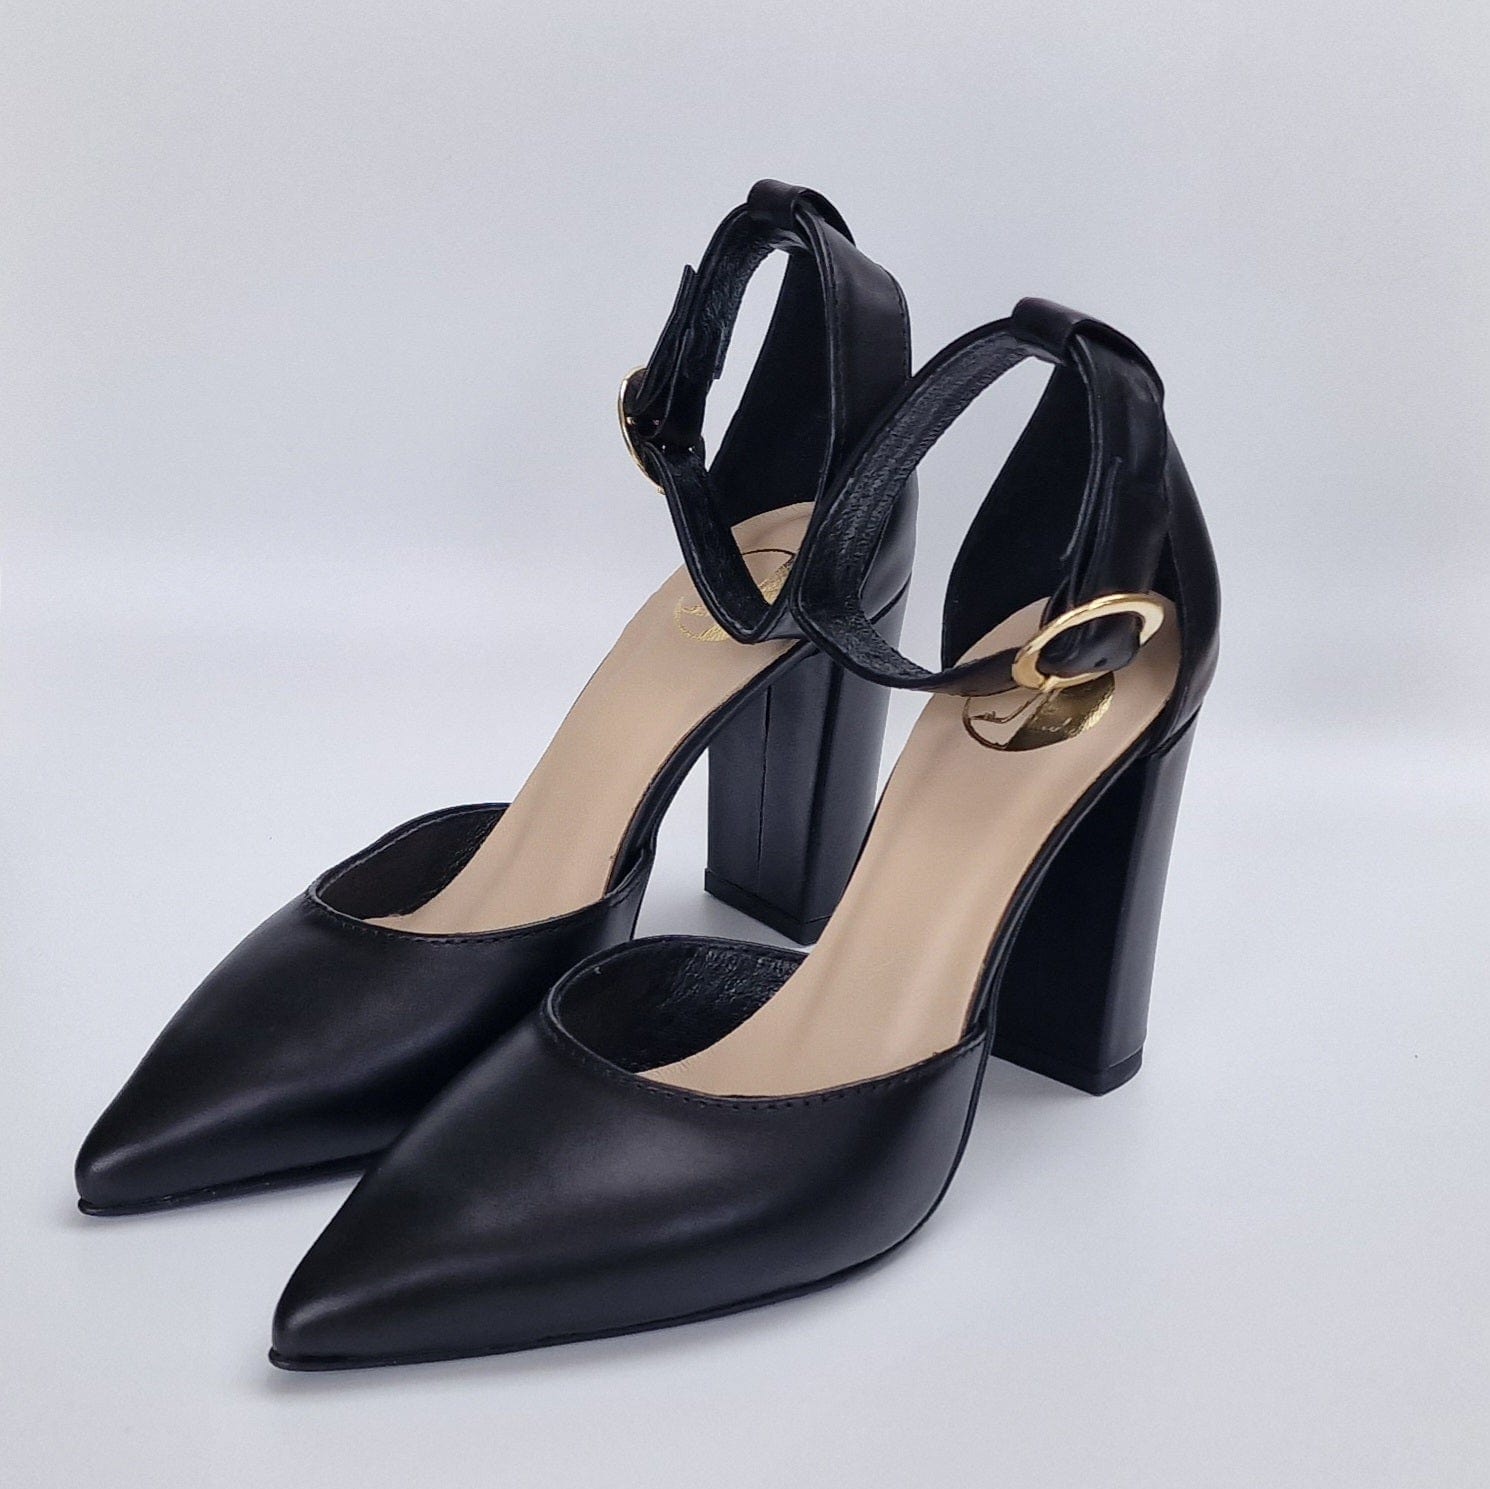 Chloe Slippers Best Price In Pakistan | Rs 2800 | find the best quality of  Footwear, Slippers, Shoes, Sandals, Heels, High-heels, Khoosa, Sneakers,  Kolhapuri Chappal, Kitten Heel, Jutti, Boots at Wishlistpk.com